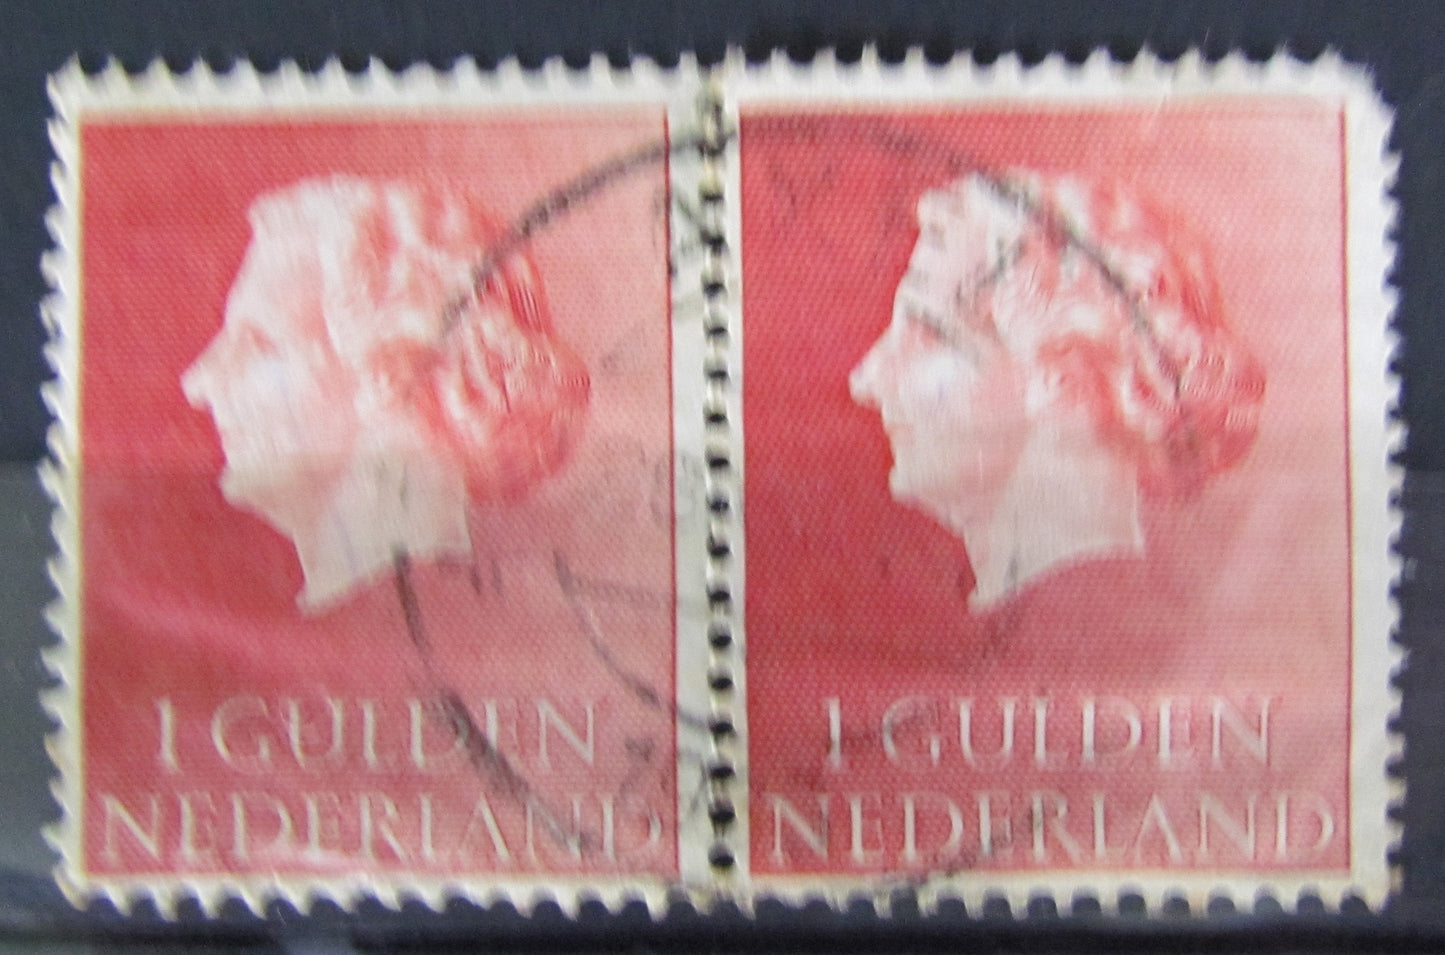 Dutch Netherlands 1953 1 Gulden Queen Juliana Large Format Strip Of Stamps (2) Cancelled